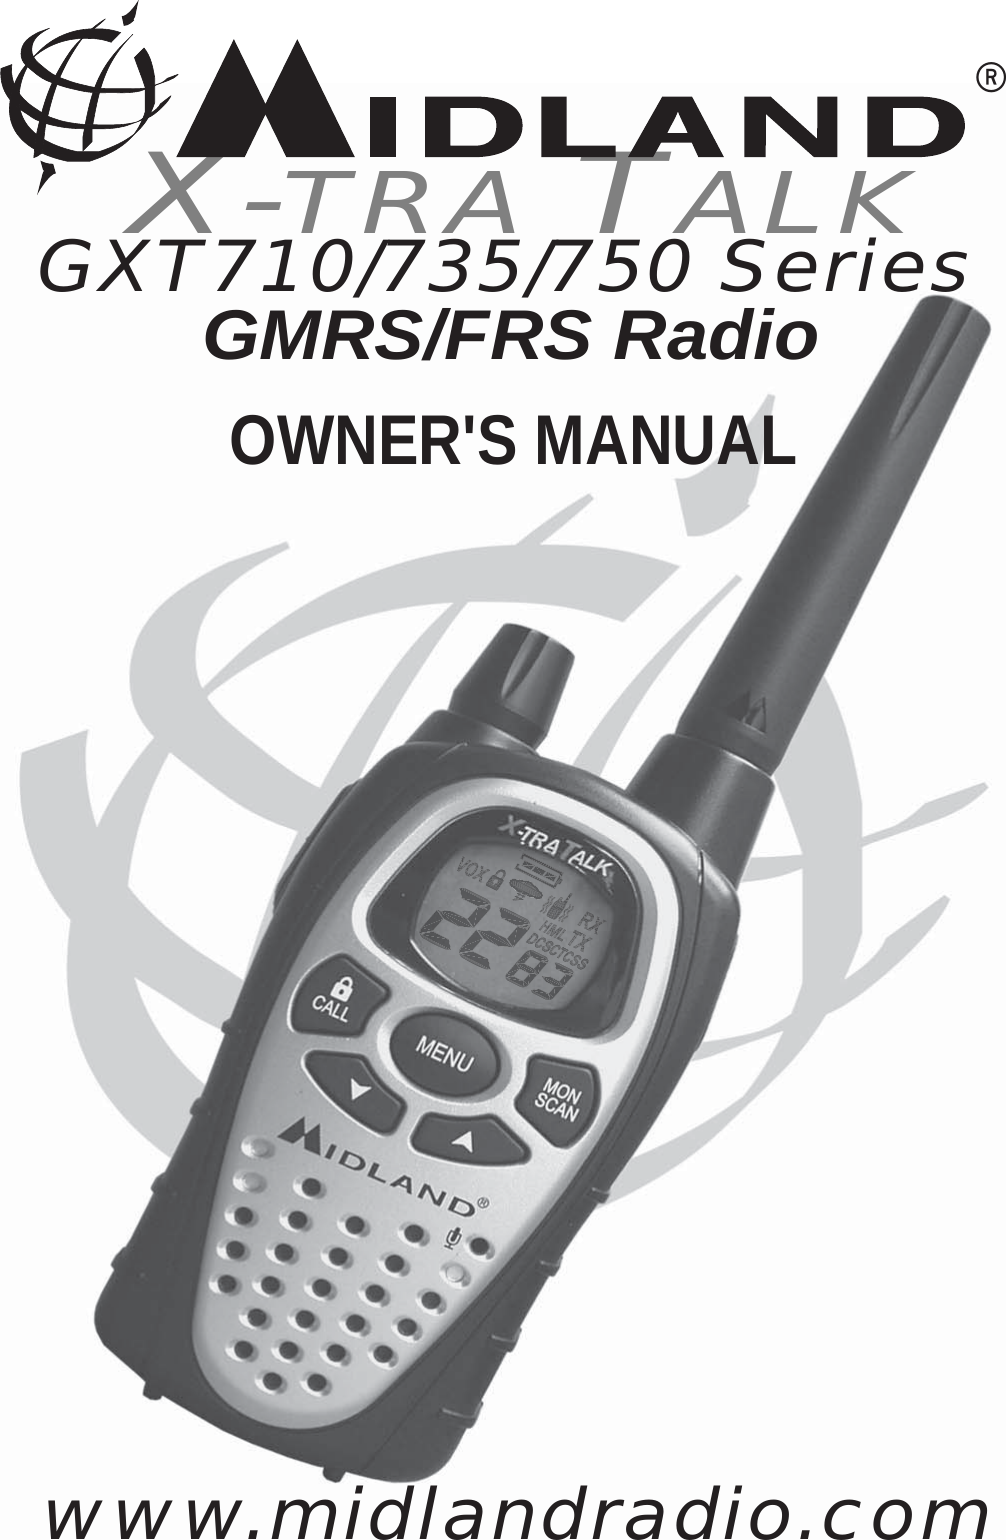 GXT710/735/750 Series         GMRS/FRS RadioX-TRA TALK®OWNER&apos;S MANUALwww.midlandradio.com